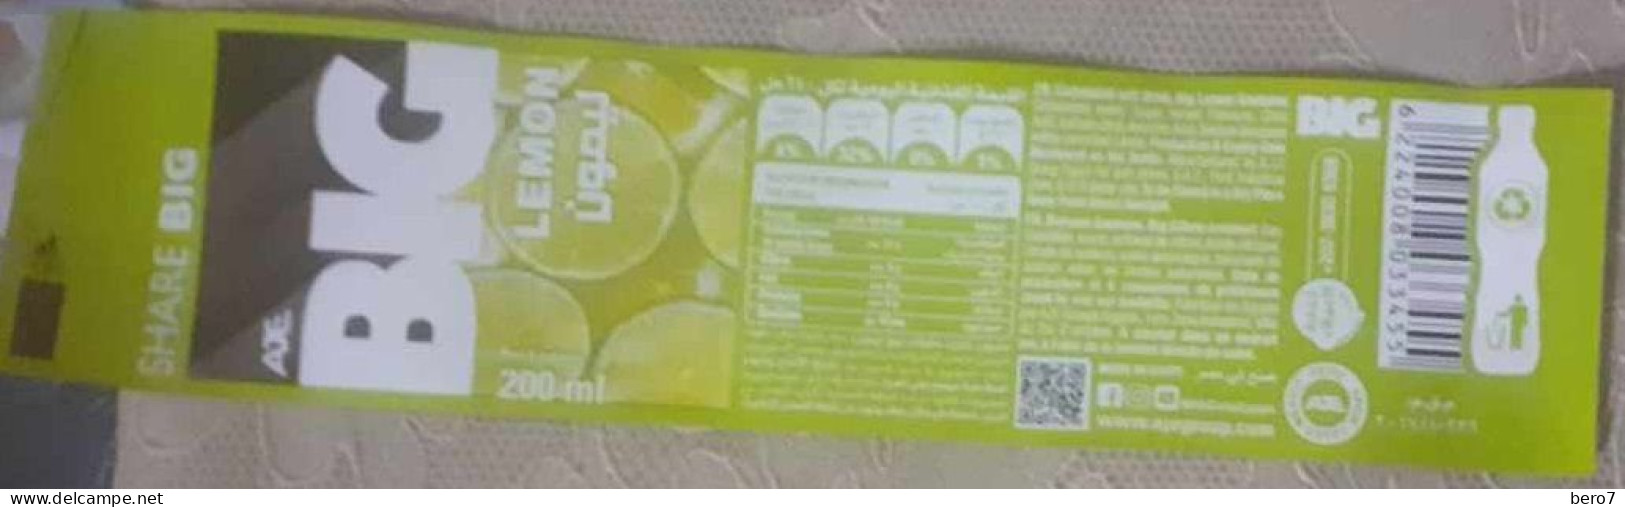 EGYPT  BIG Lemon 200 Ml (Egypte) (Egitto) (Ägypten) (Egipto) (Egypten) - Other & Unclassified